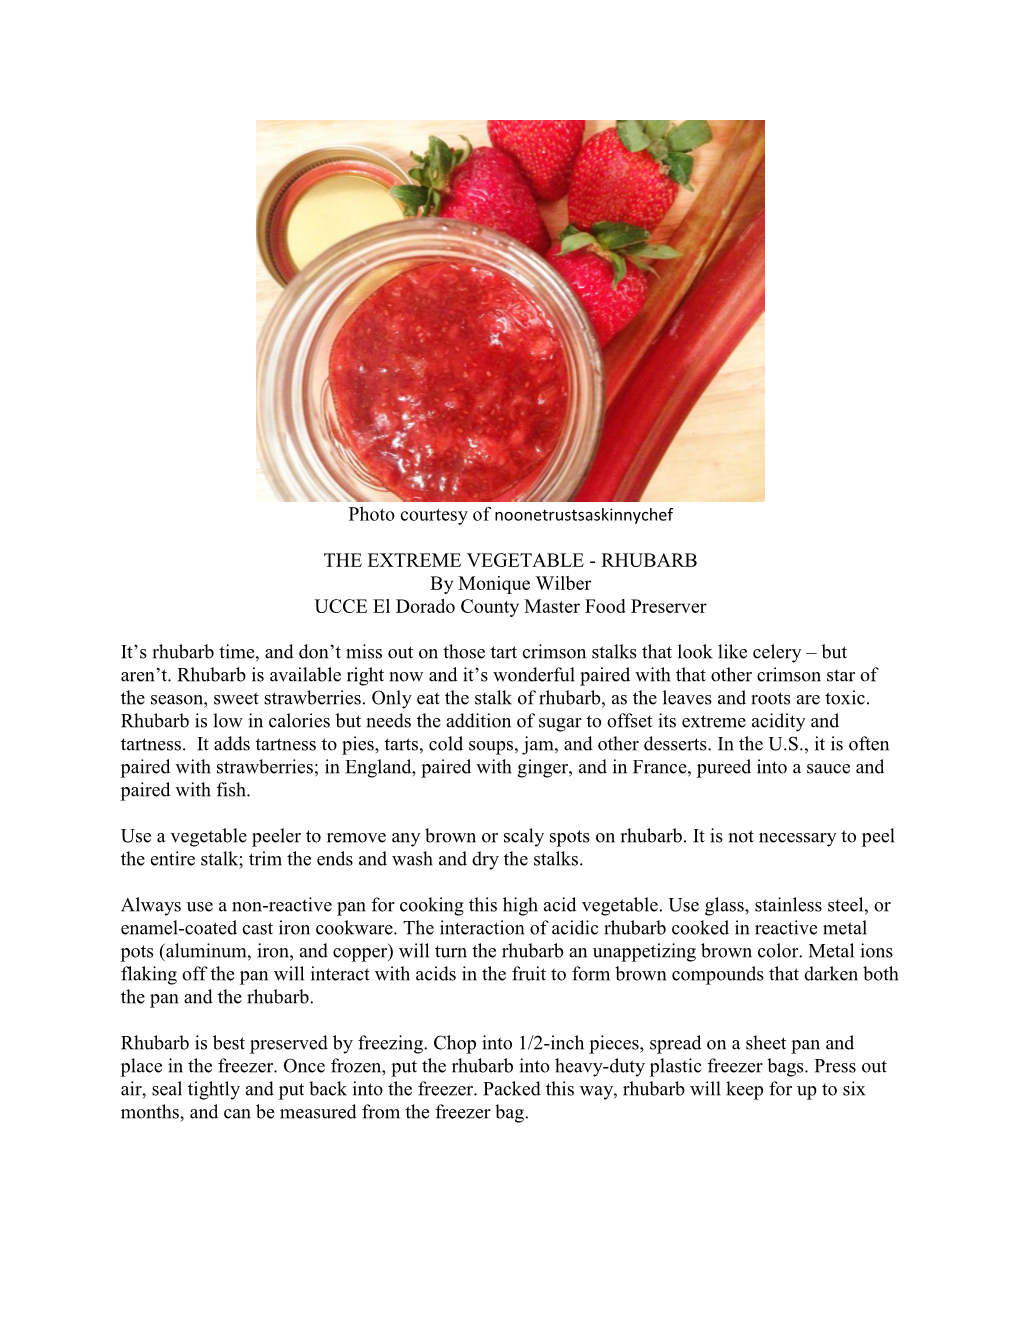 THE EXTREME VEGETABLE - RHUBARB by Monique Wilber UCCE El Dorado County Master Food Preserver